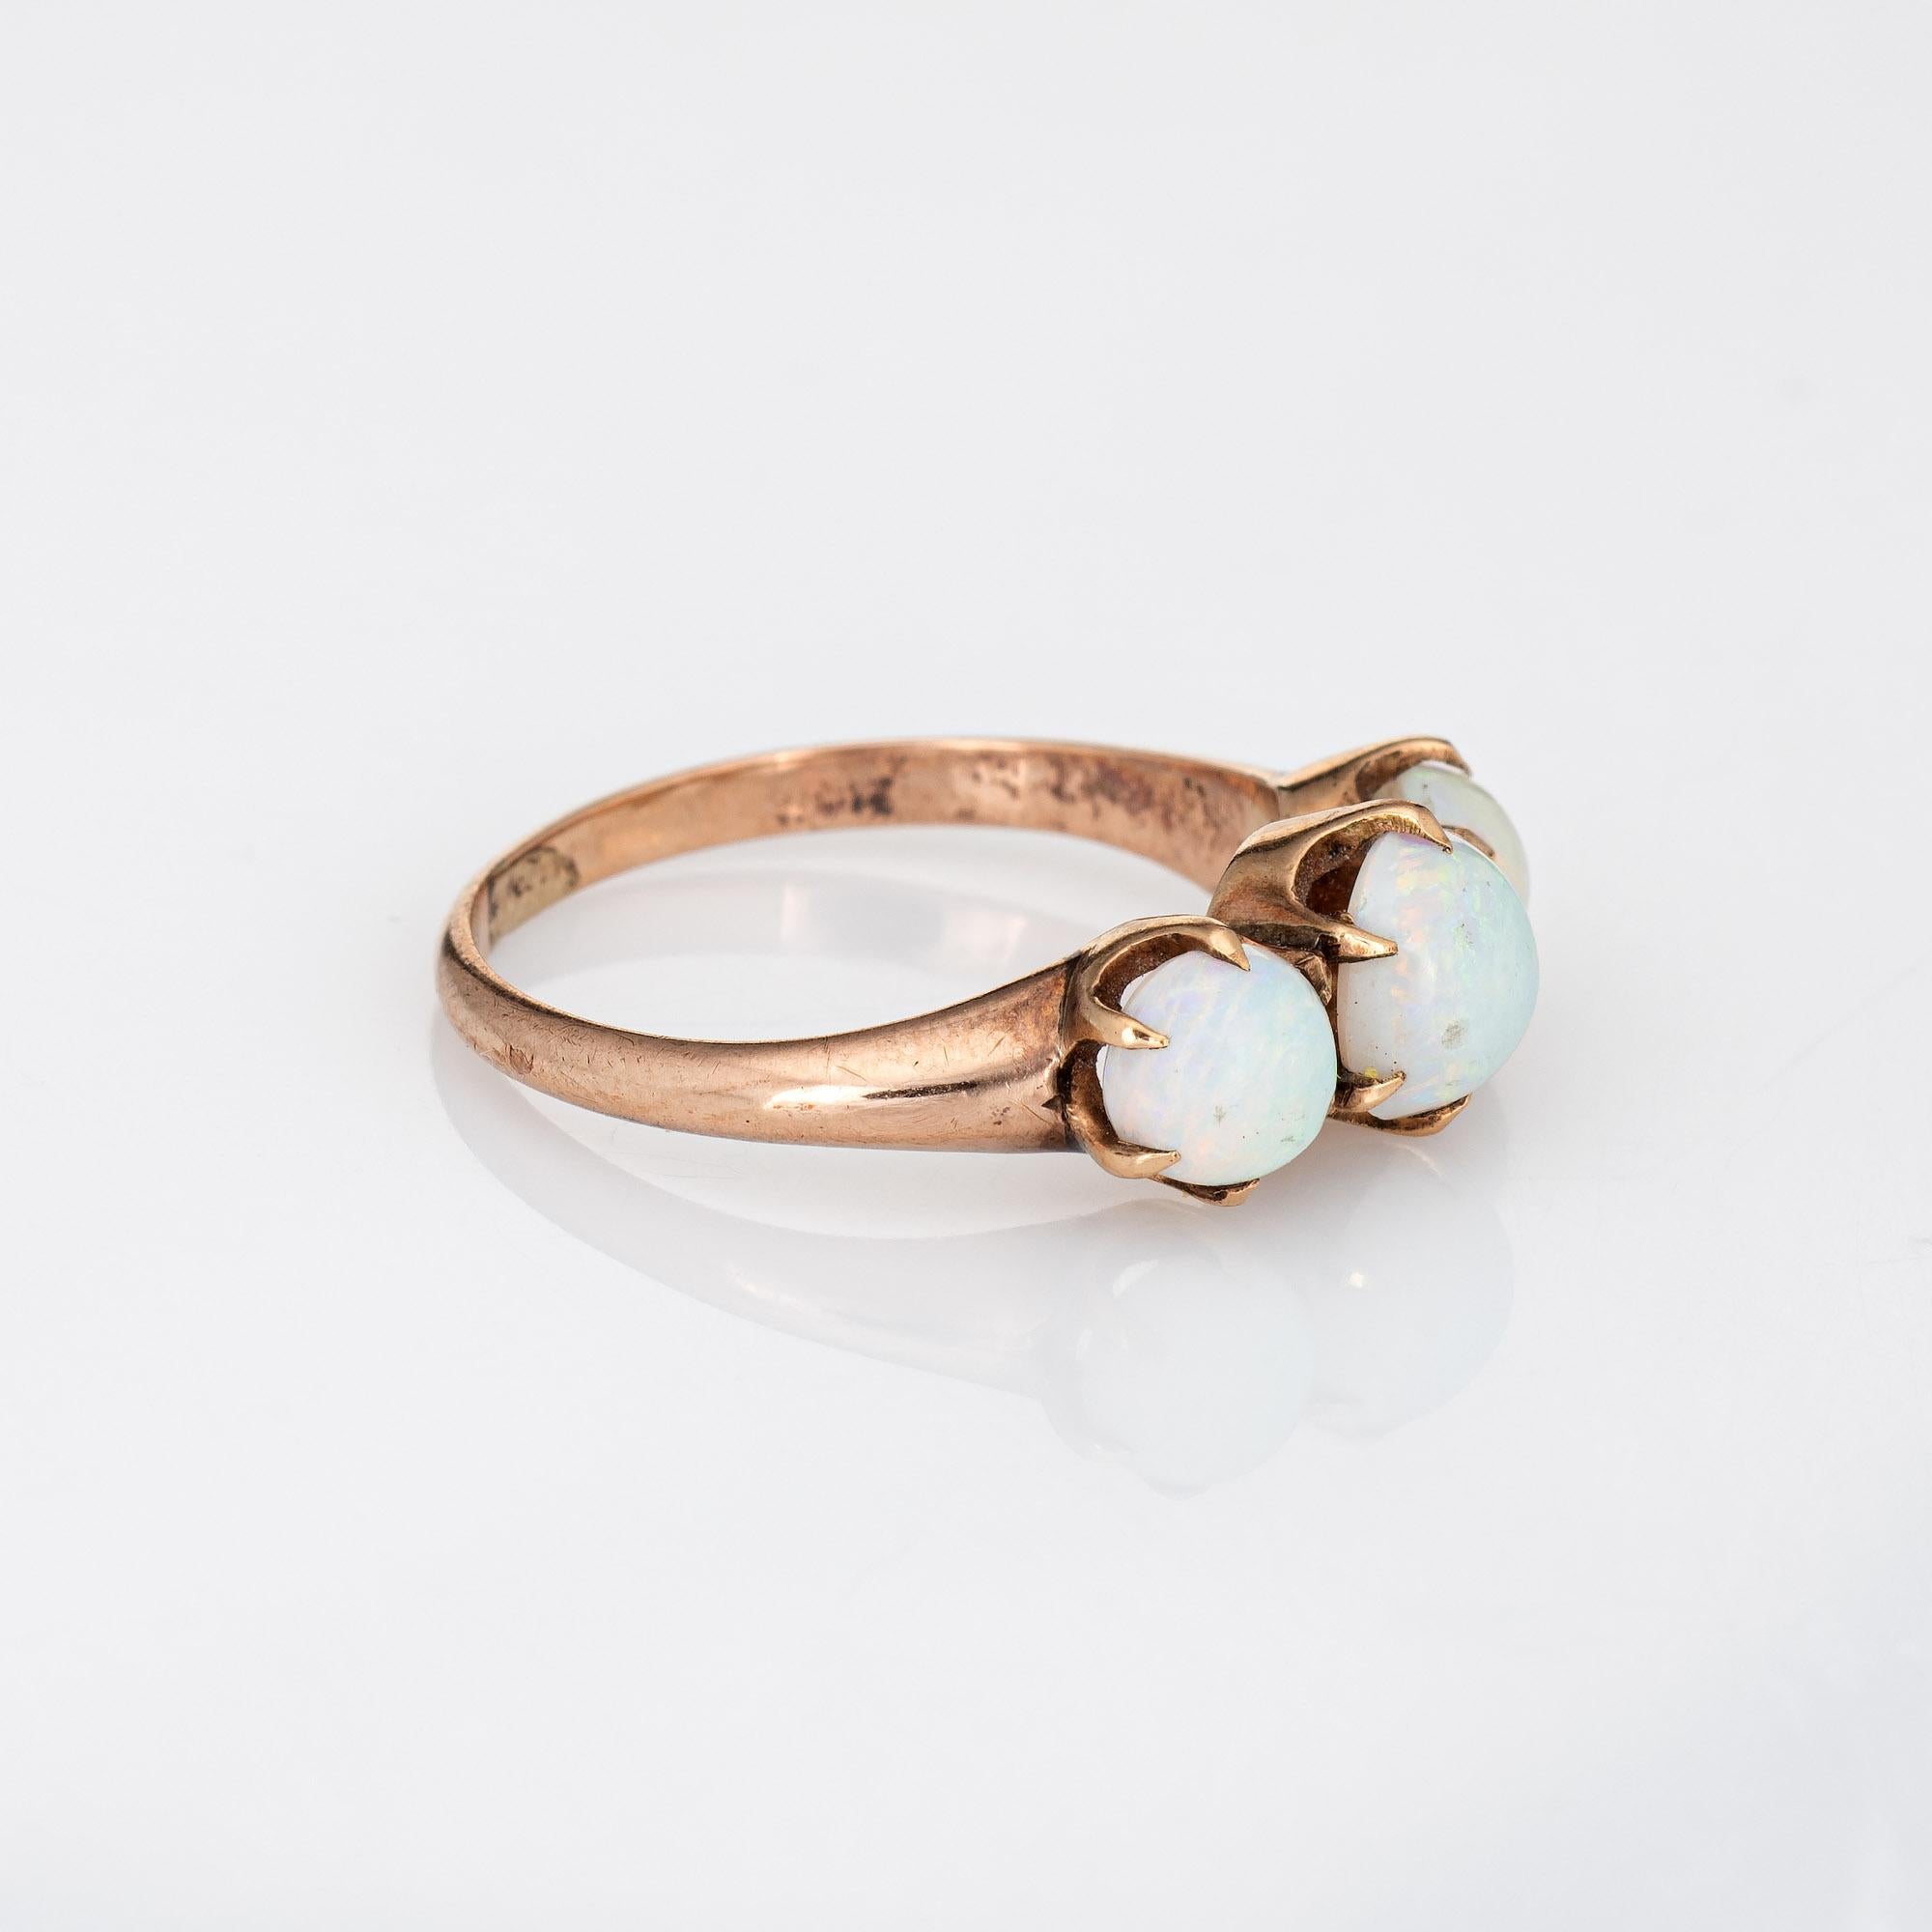 3 opal ring